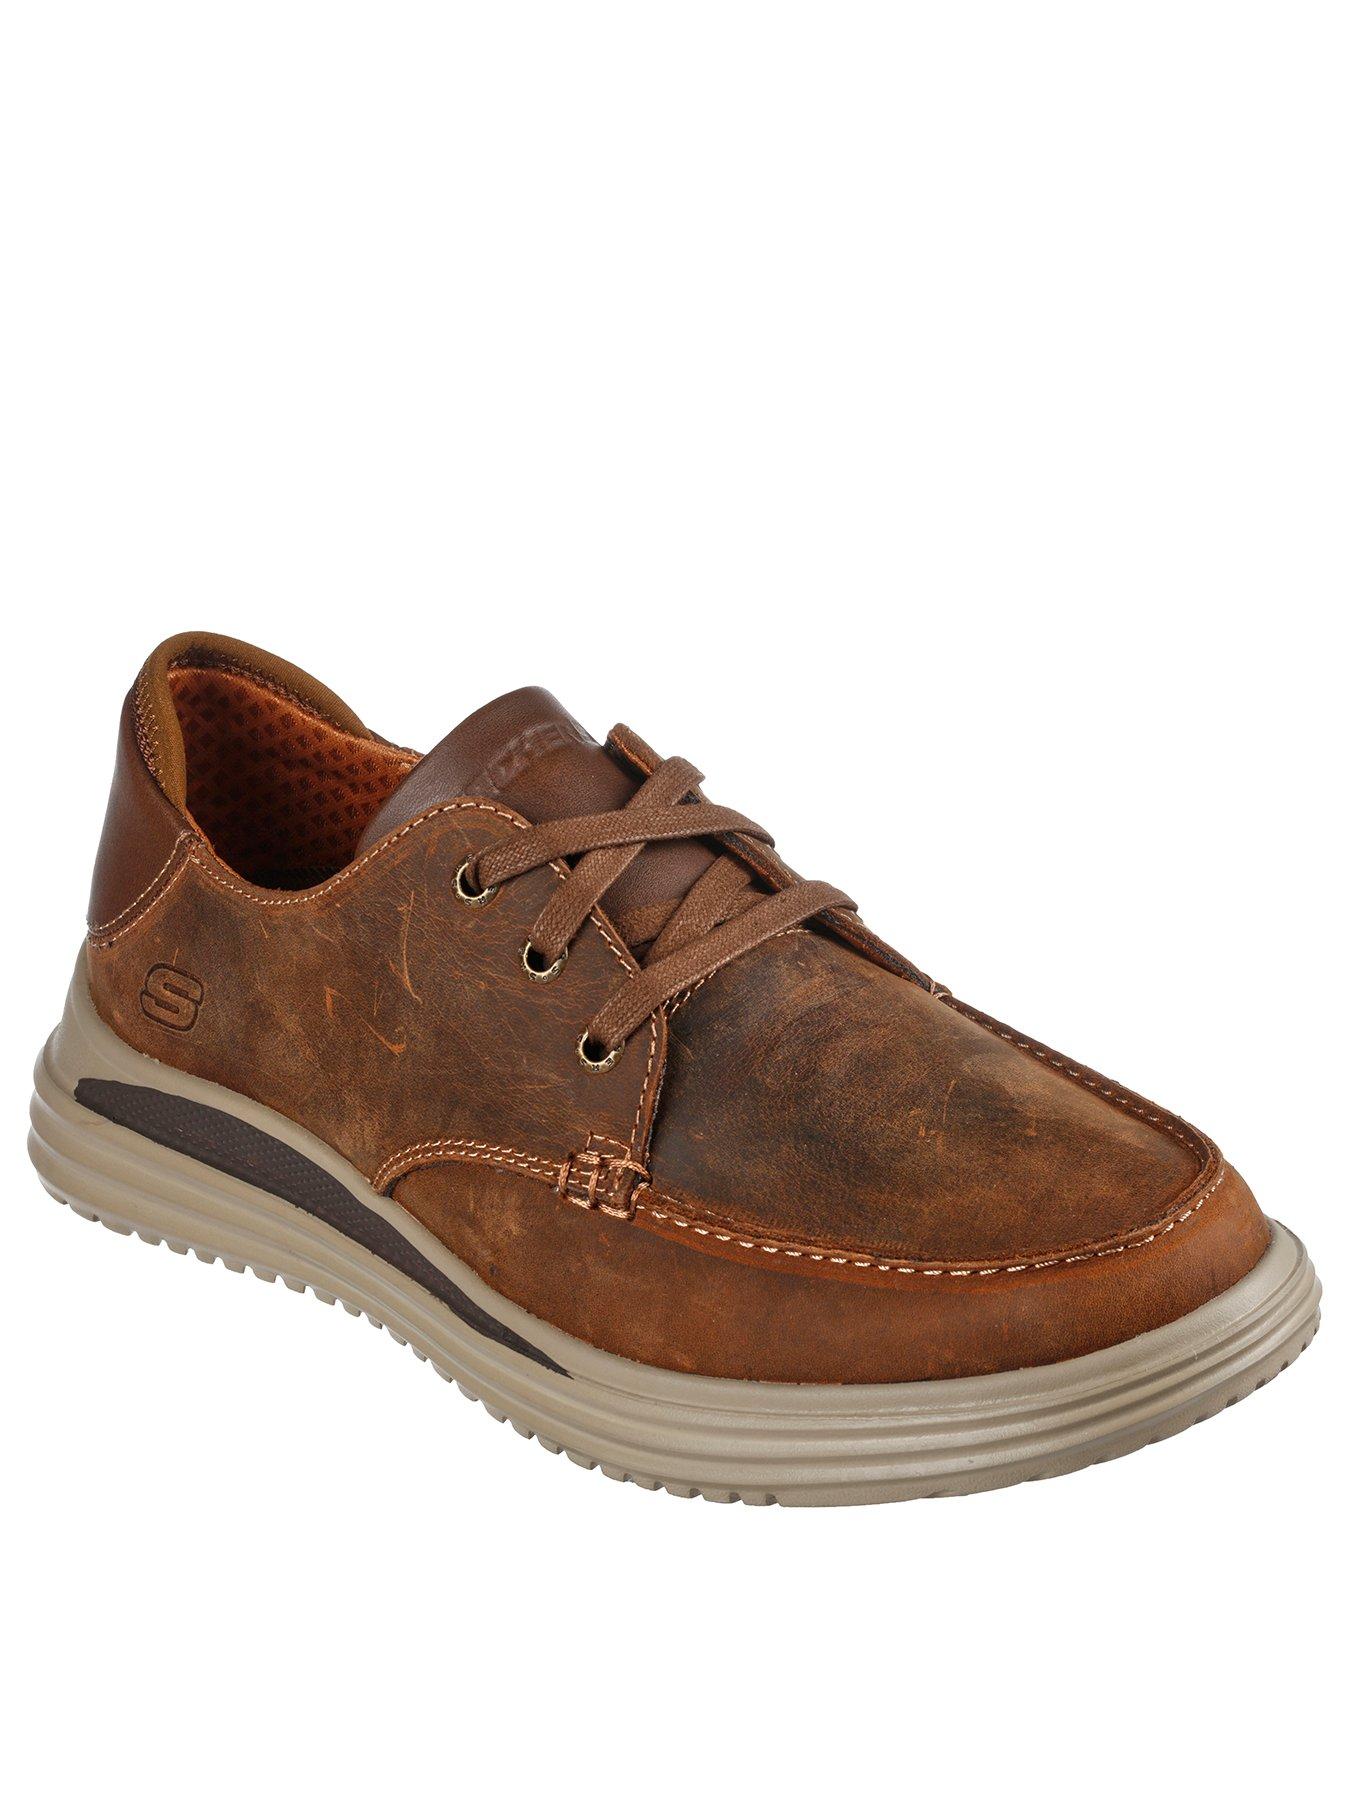 Skechers Proven Leather Moc Toe Shoe | very.co.uk